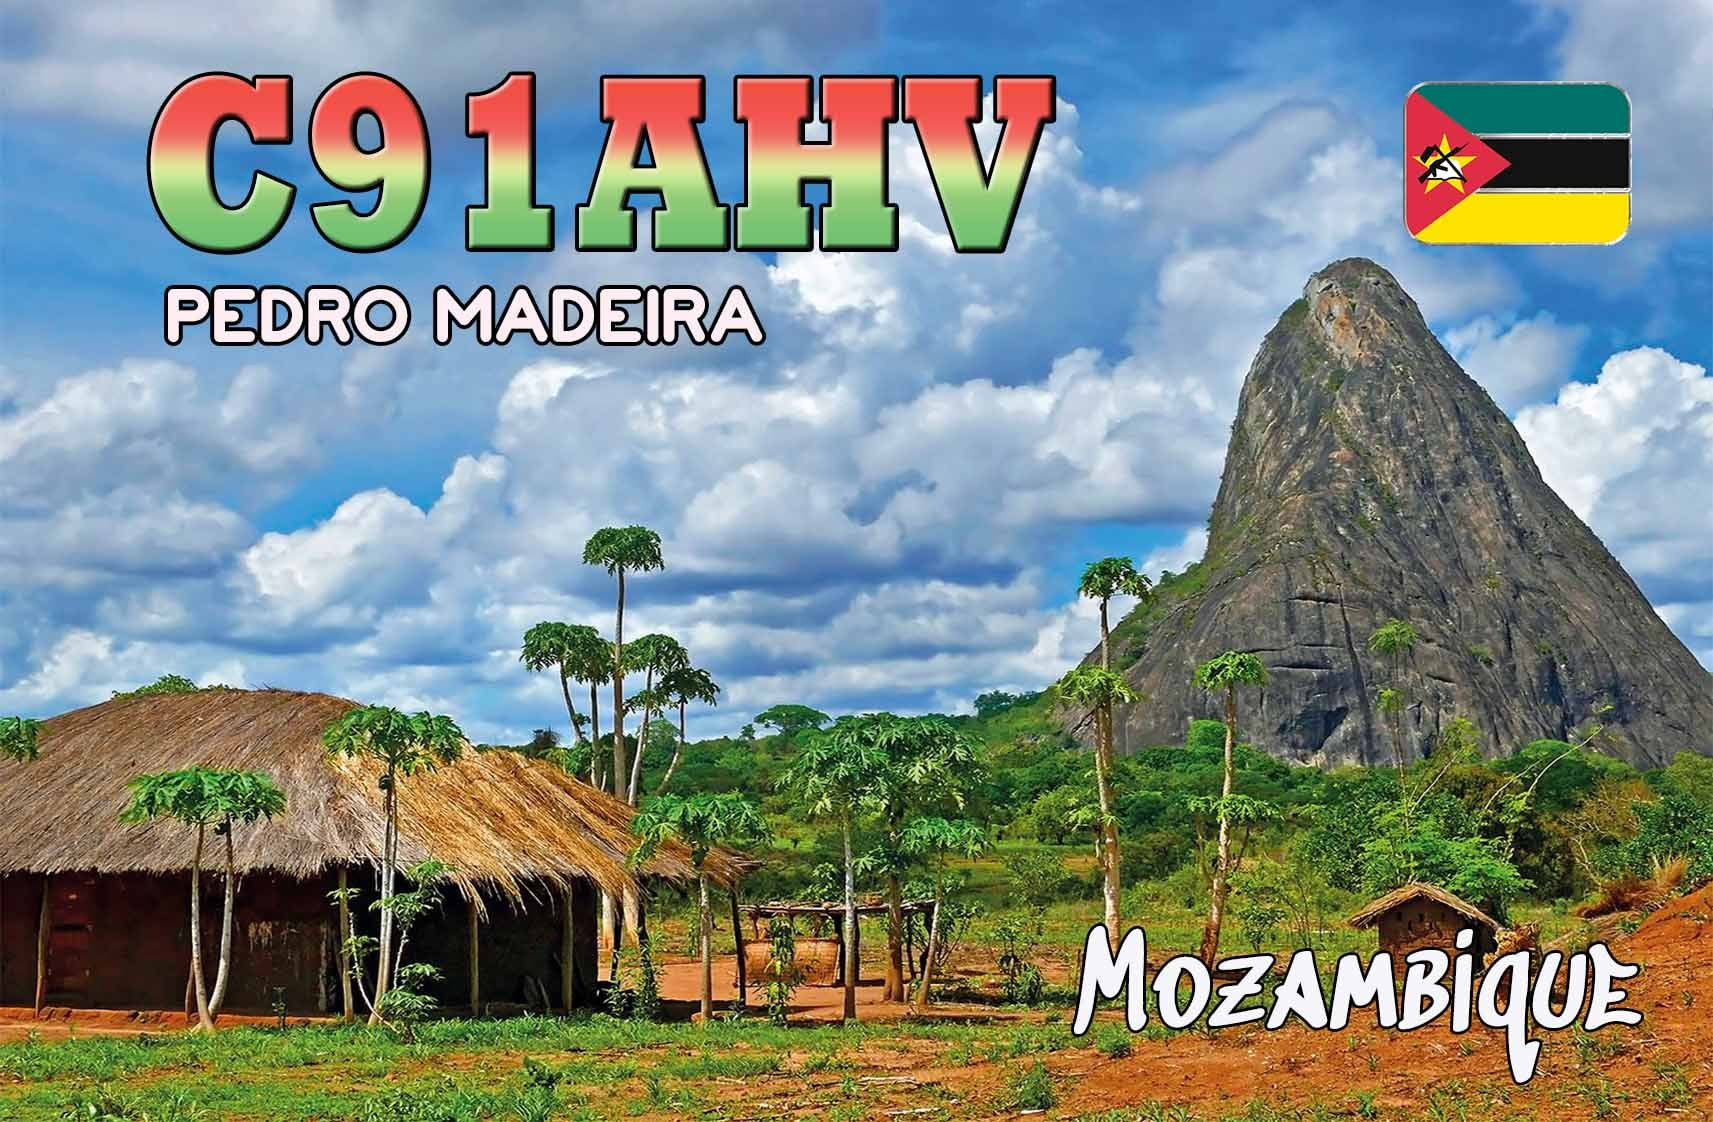 C91AHV Mozambique QSL Card